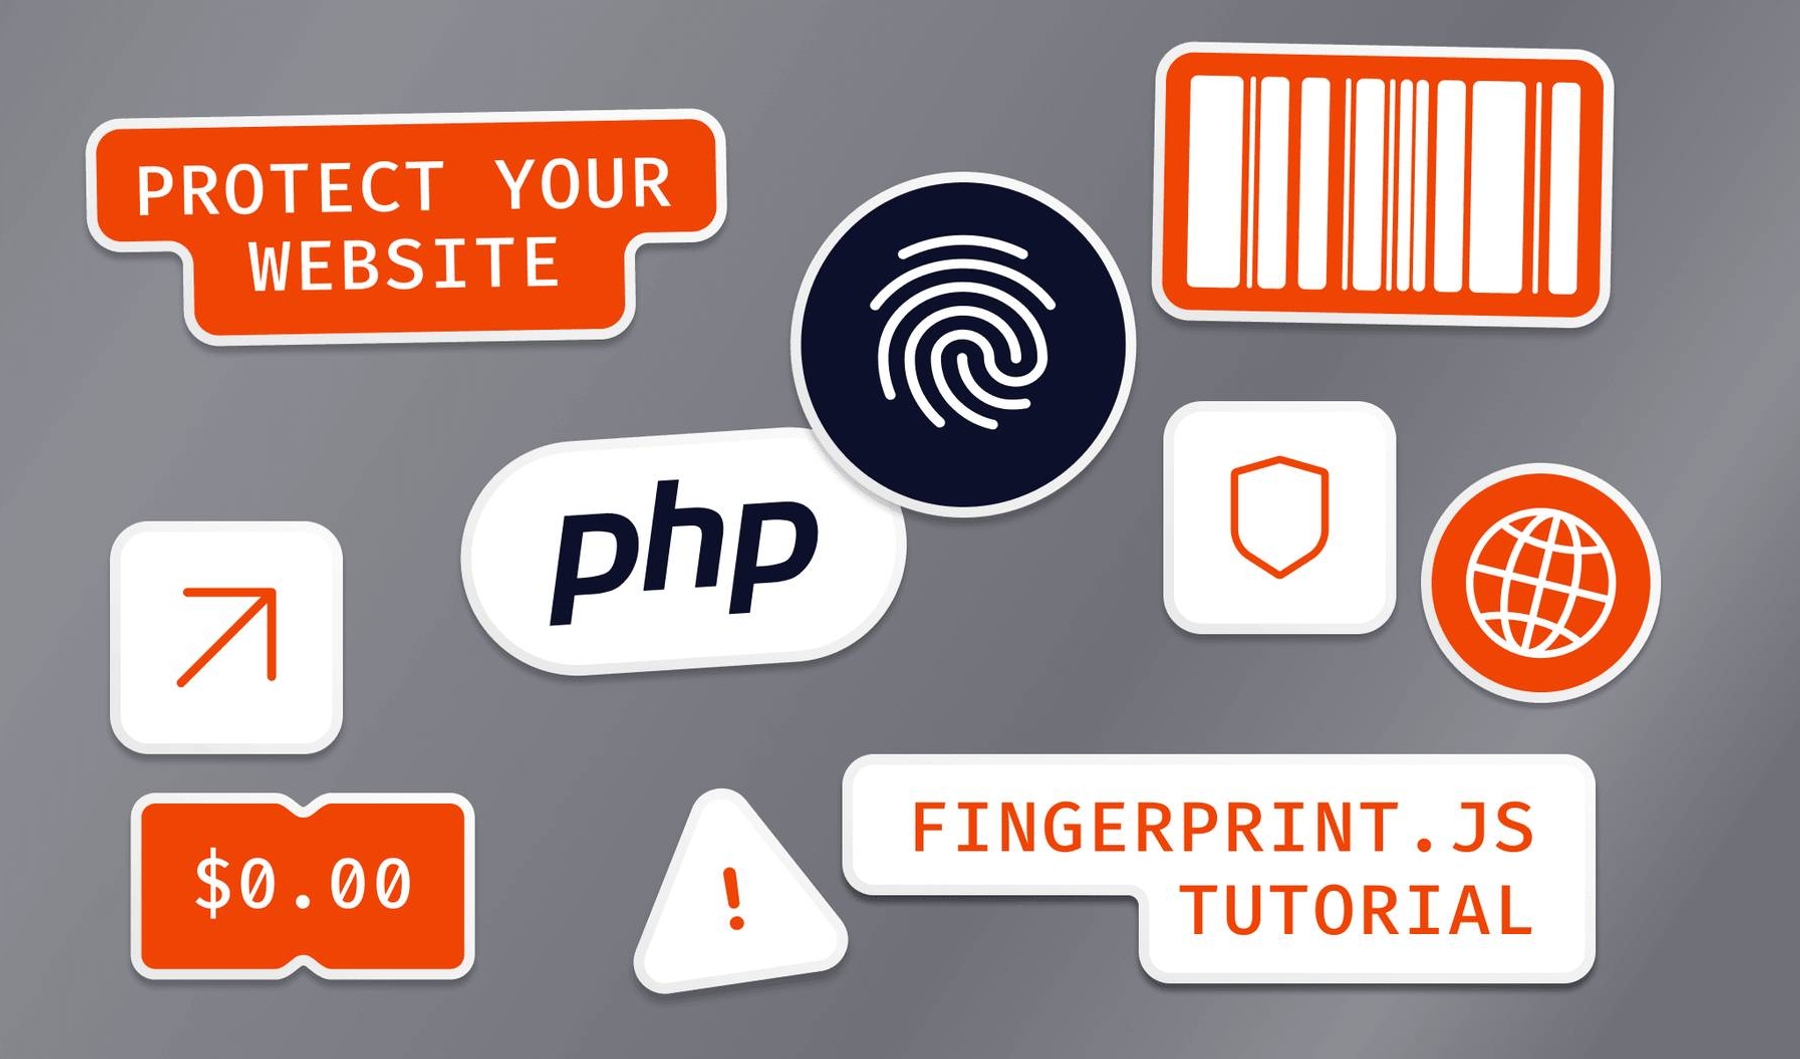 browser fingerprinting using PHP